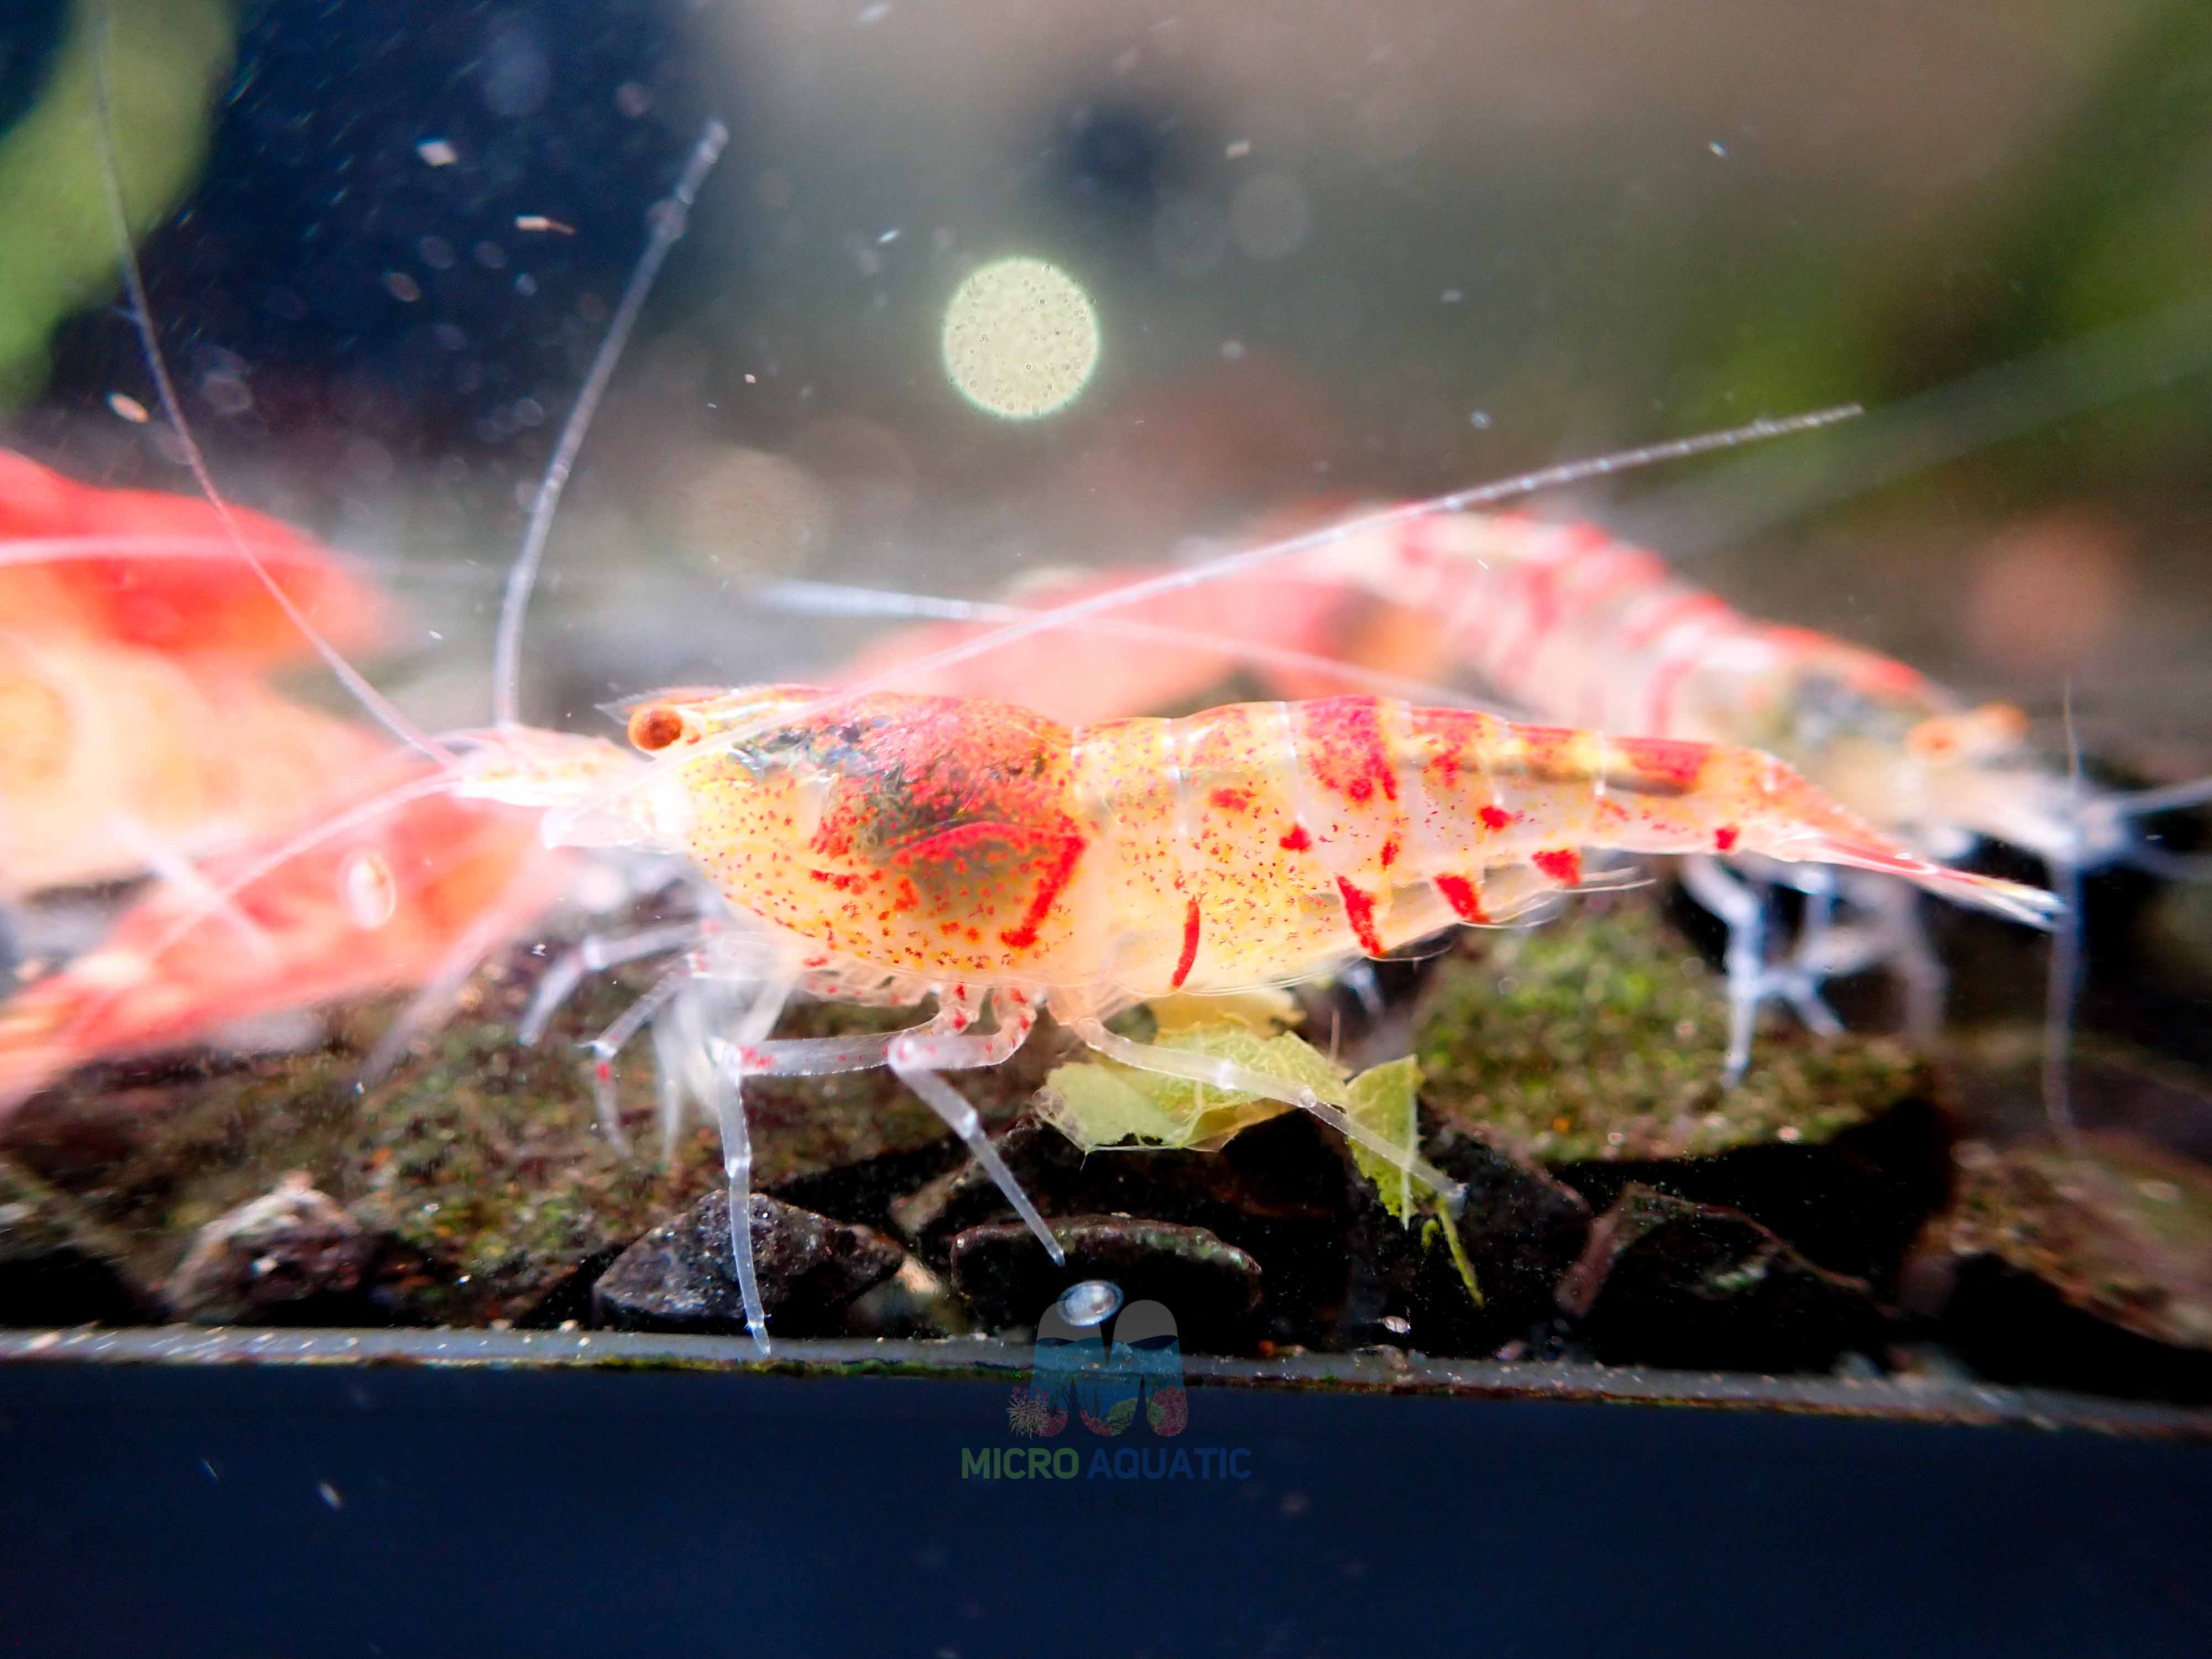 Red Tiger Shrimp - Cardina x Tiger